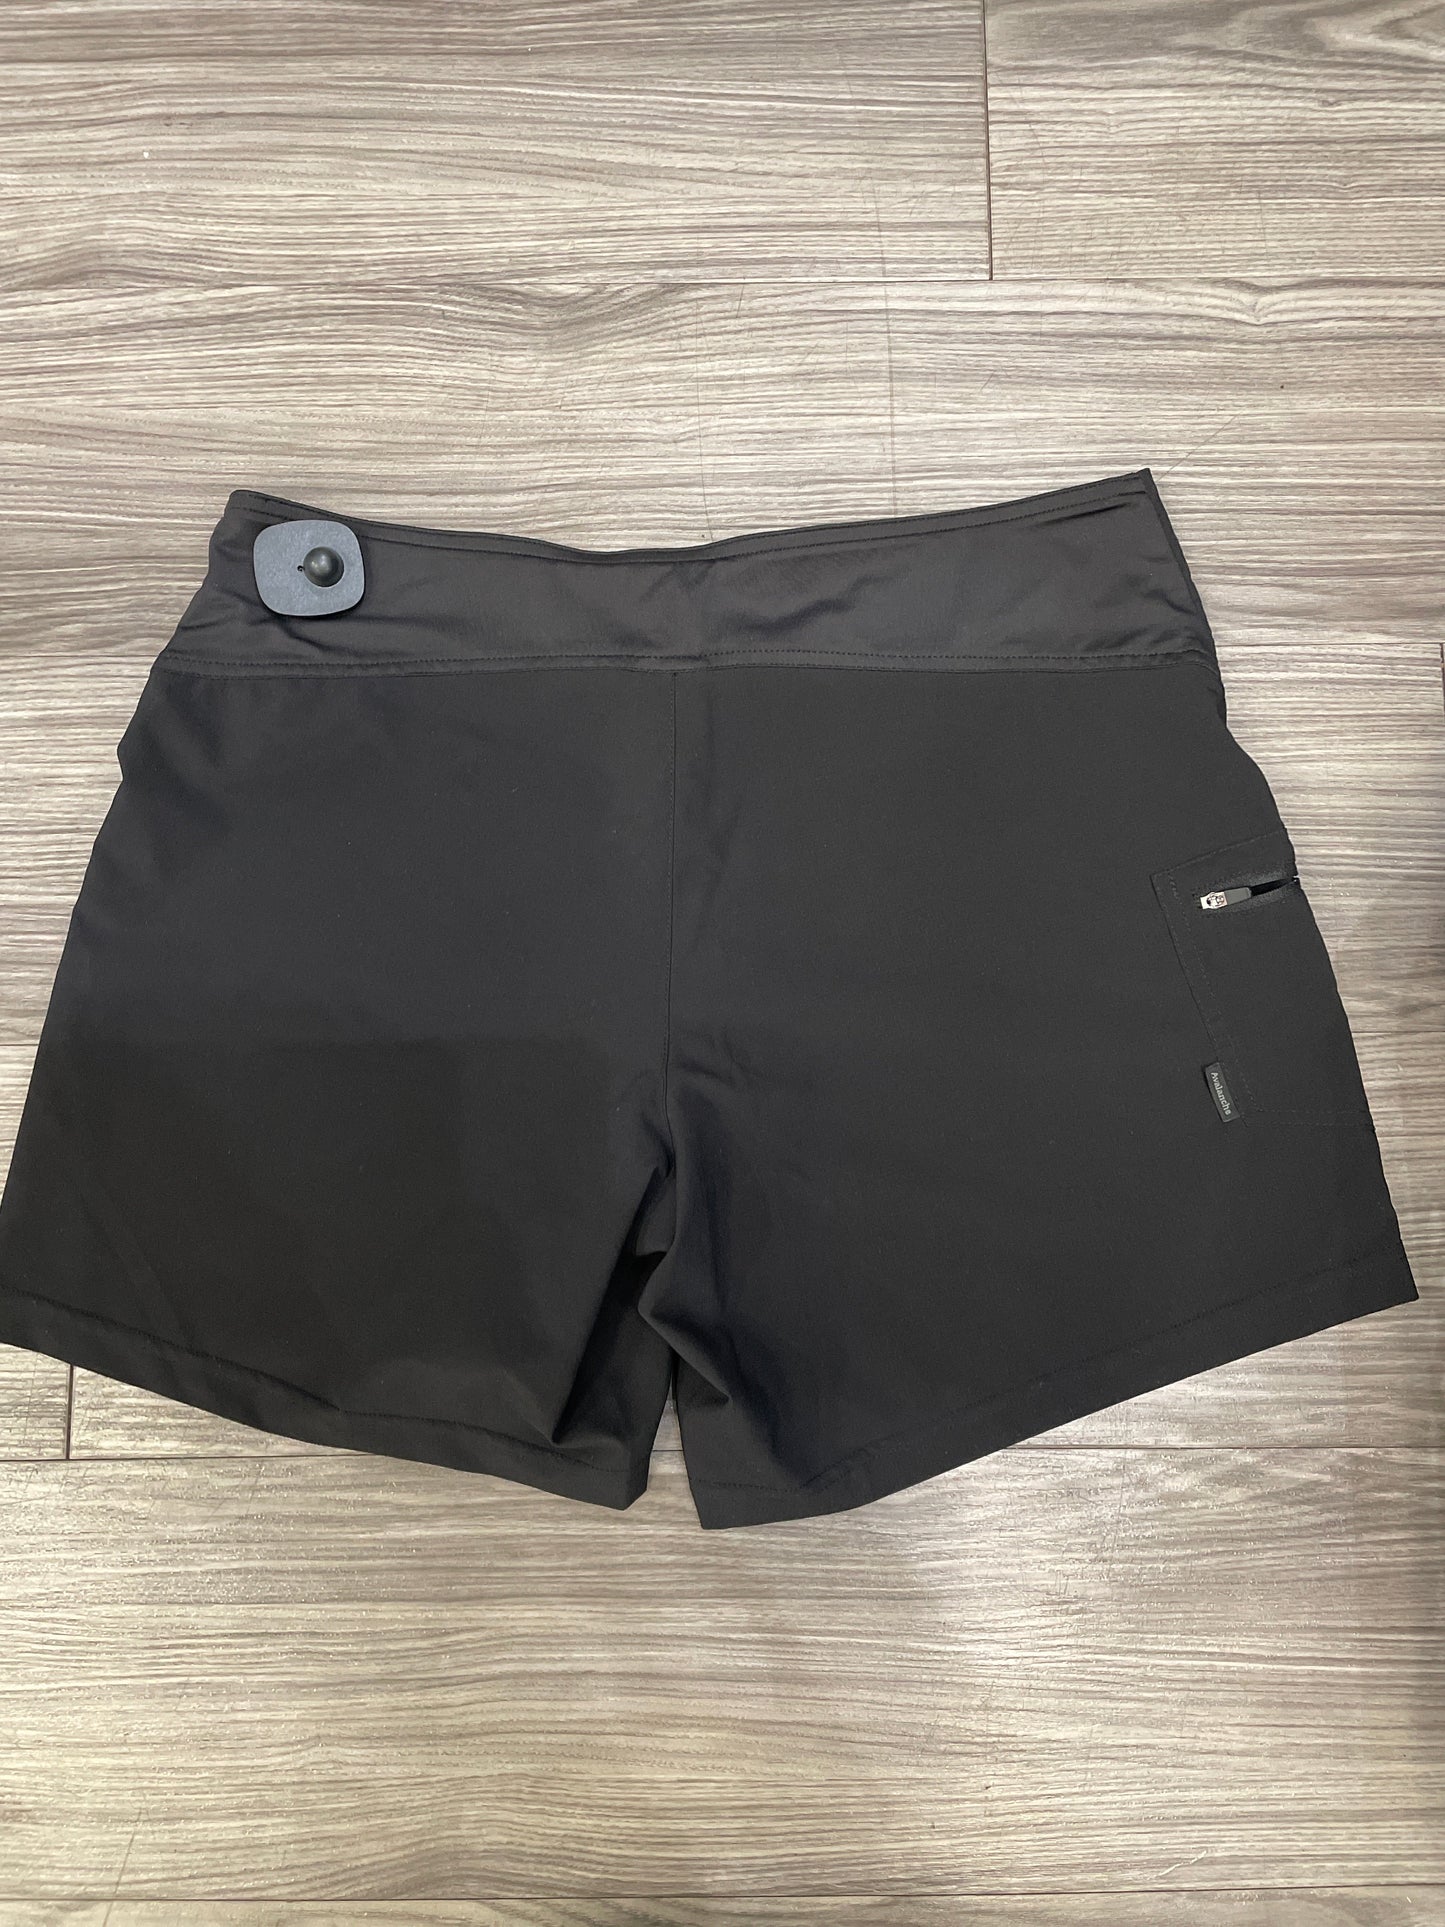 Black Shorts Avalanche, Size L